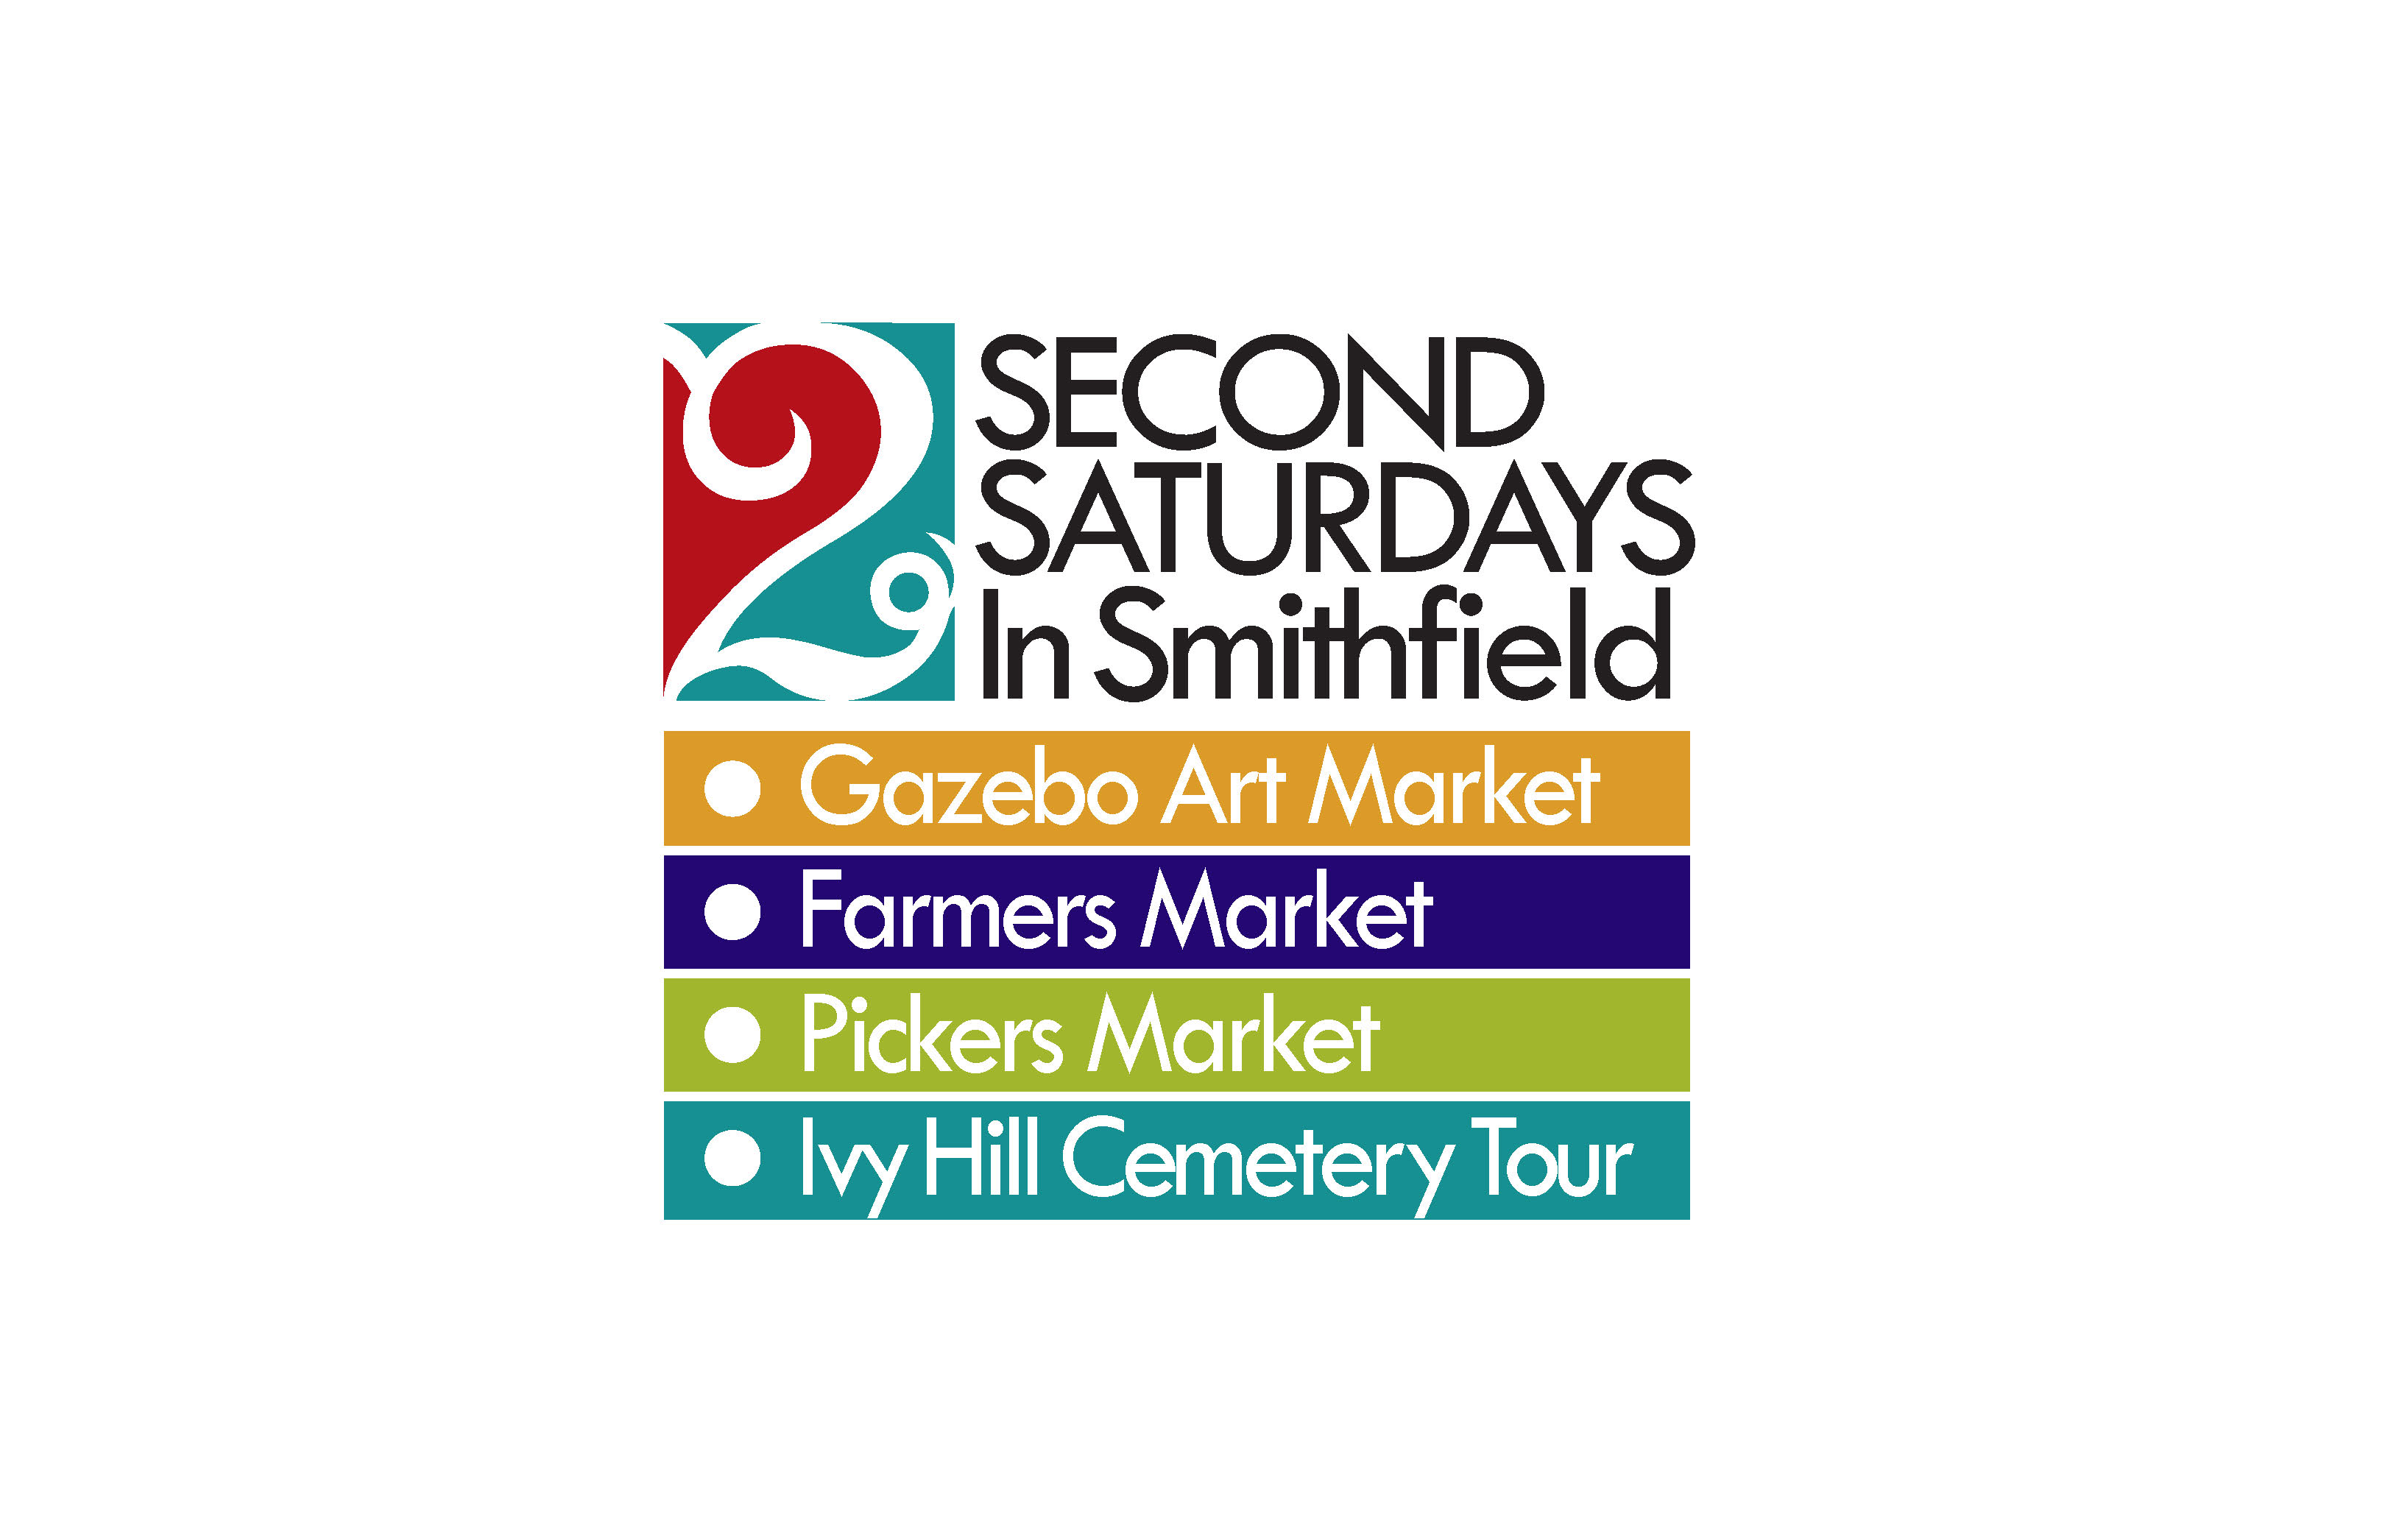 Second Saturdays in Smithfield